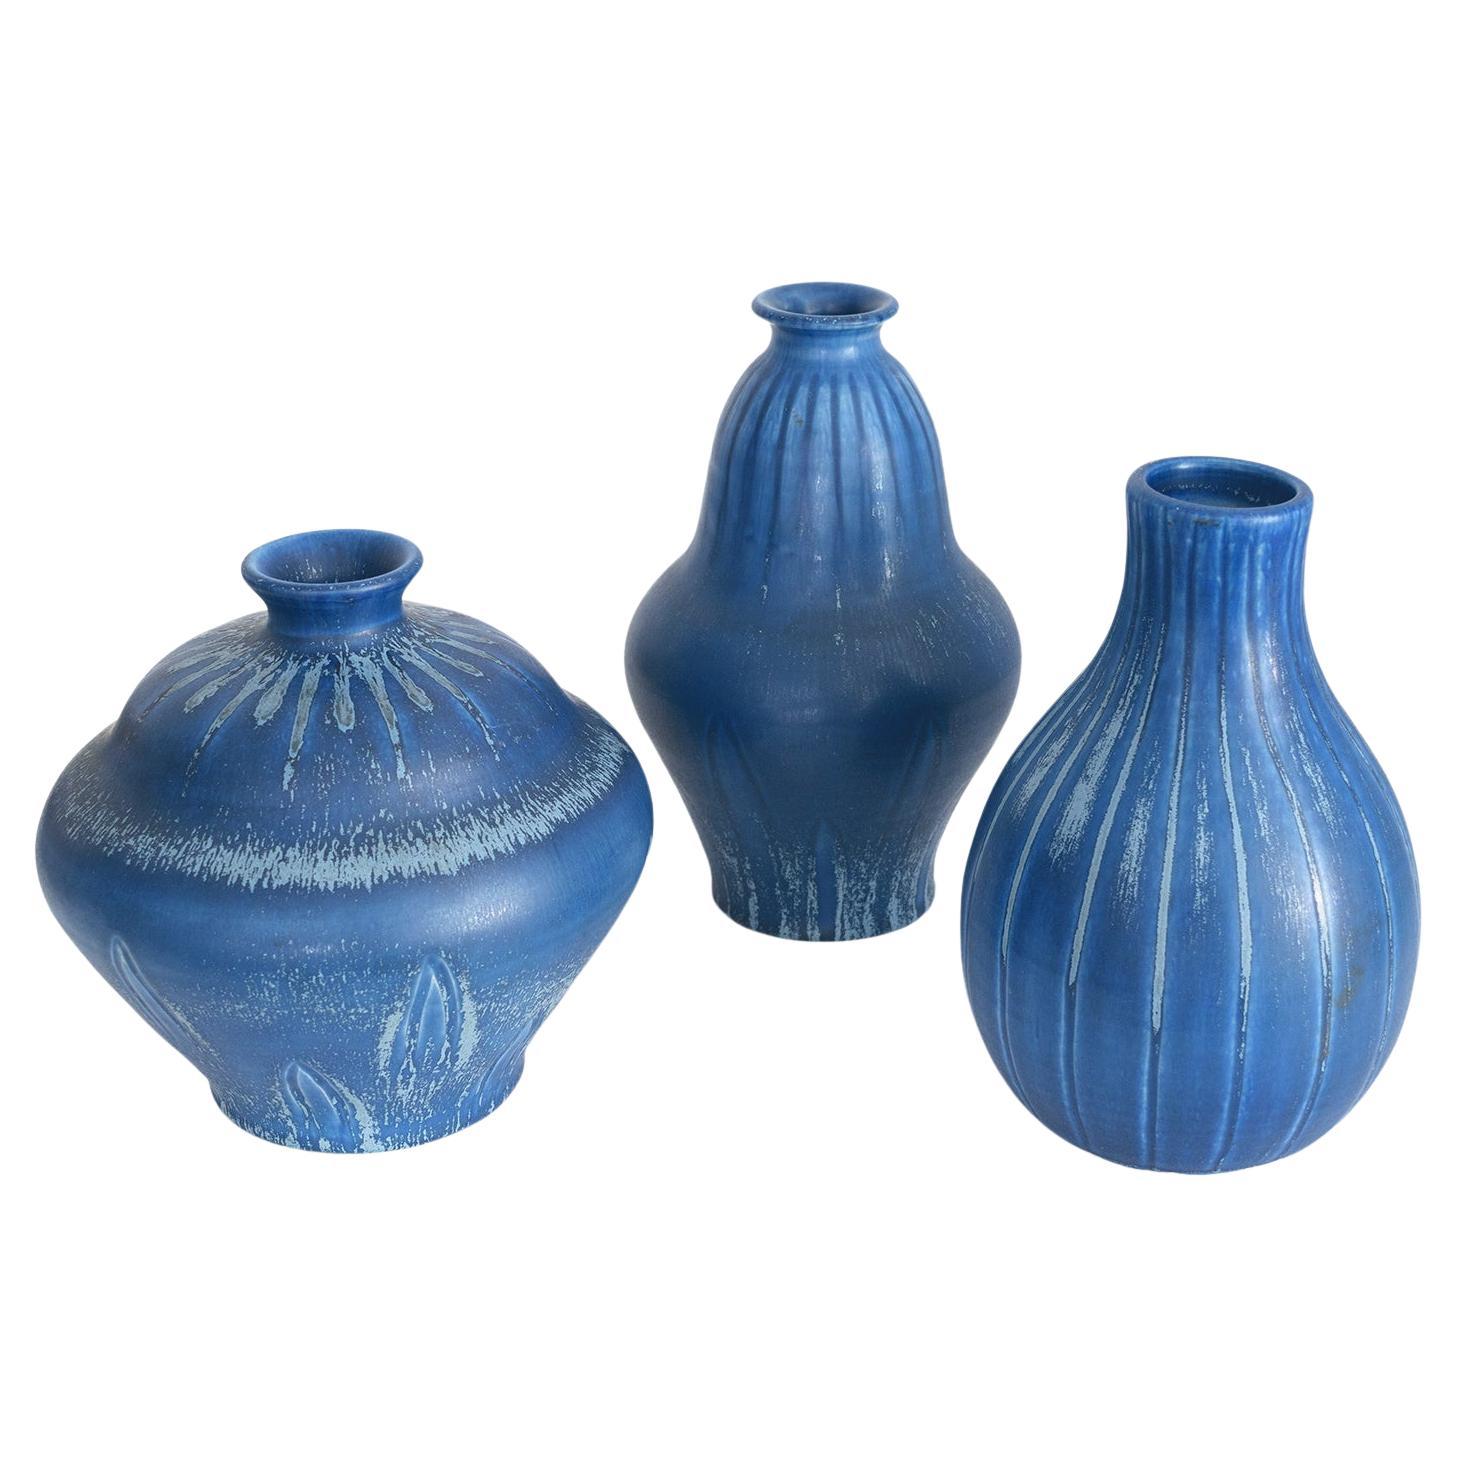 Group of Scandinavian Modern vases in blue glaze by Bo Fajans, Sweden 1940's For Sale